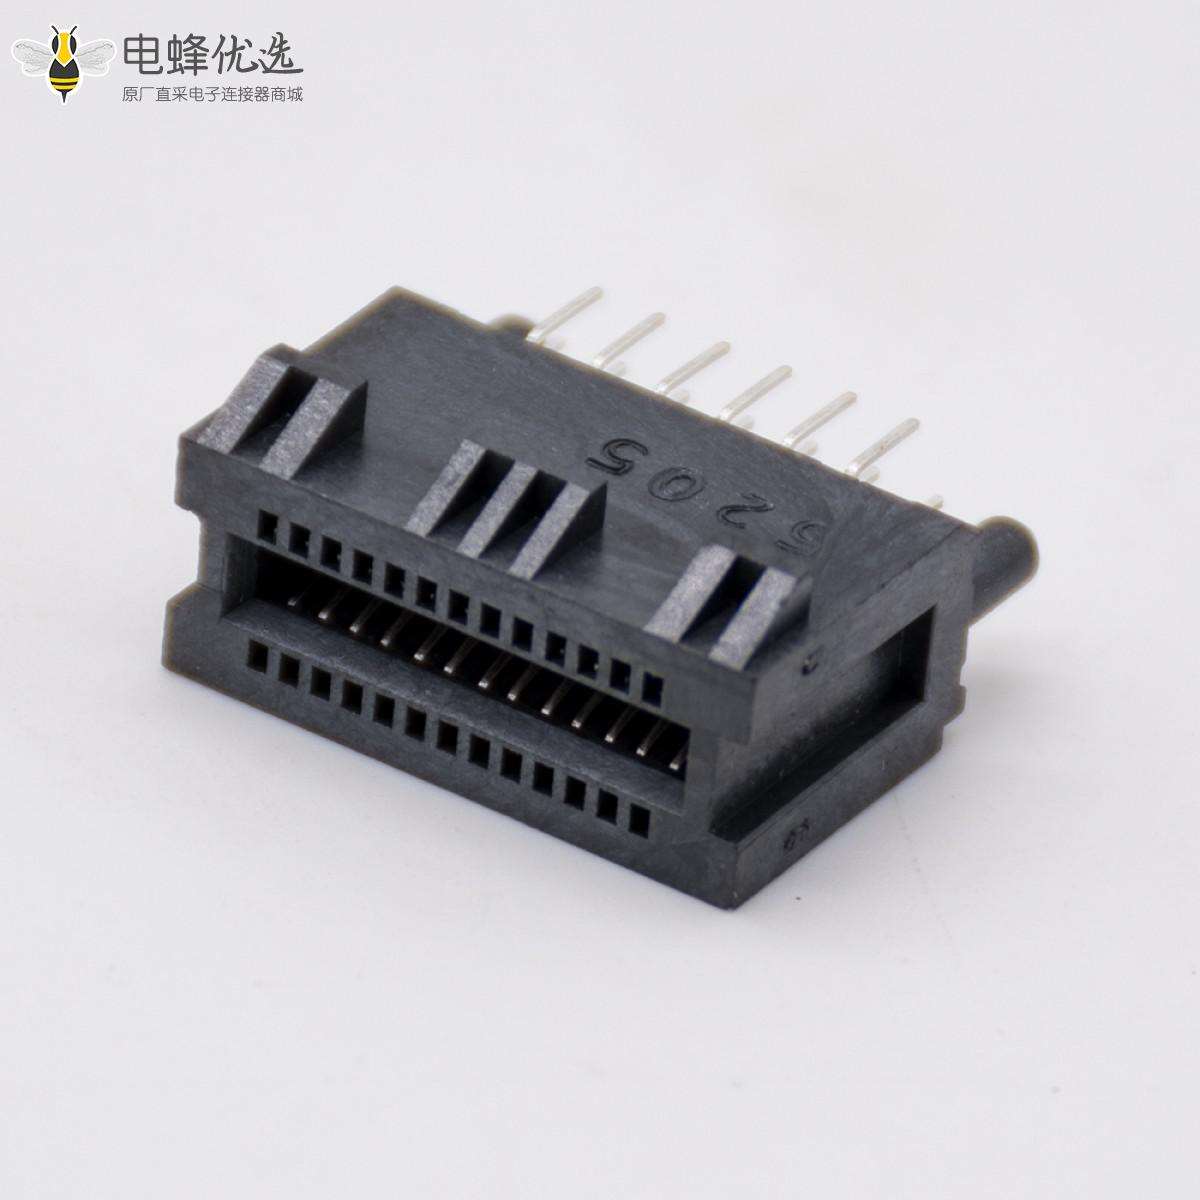 PCIE插槽背板连接器26芯插板式记忆卡槽连接器